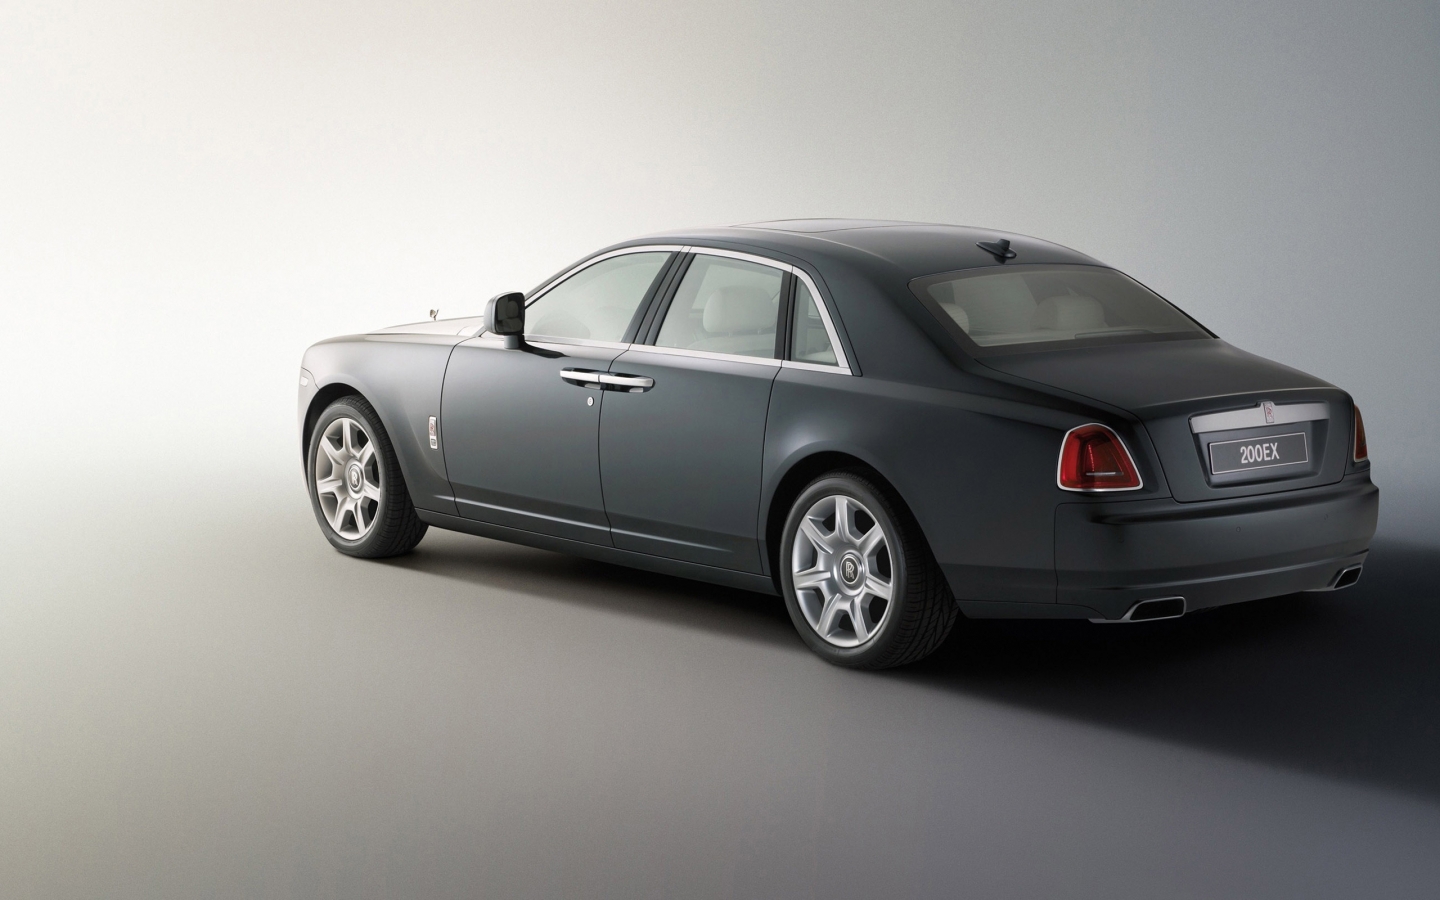 Rolls Royce 200EX for 1440 x 900 widescreen resolution